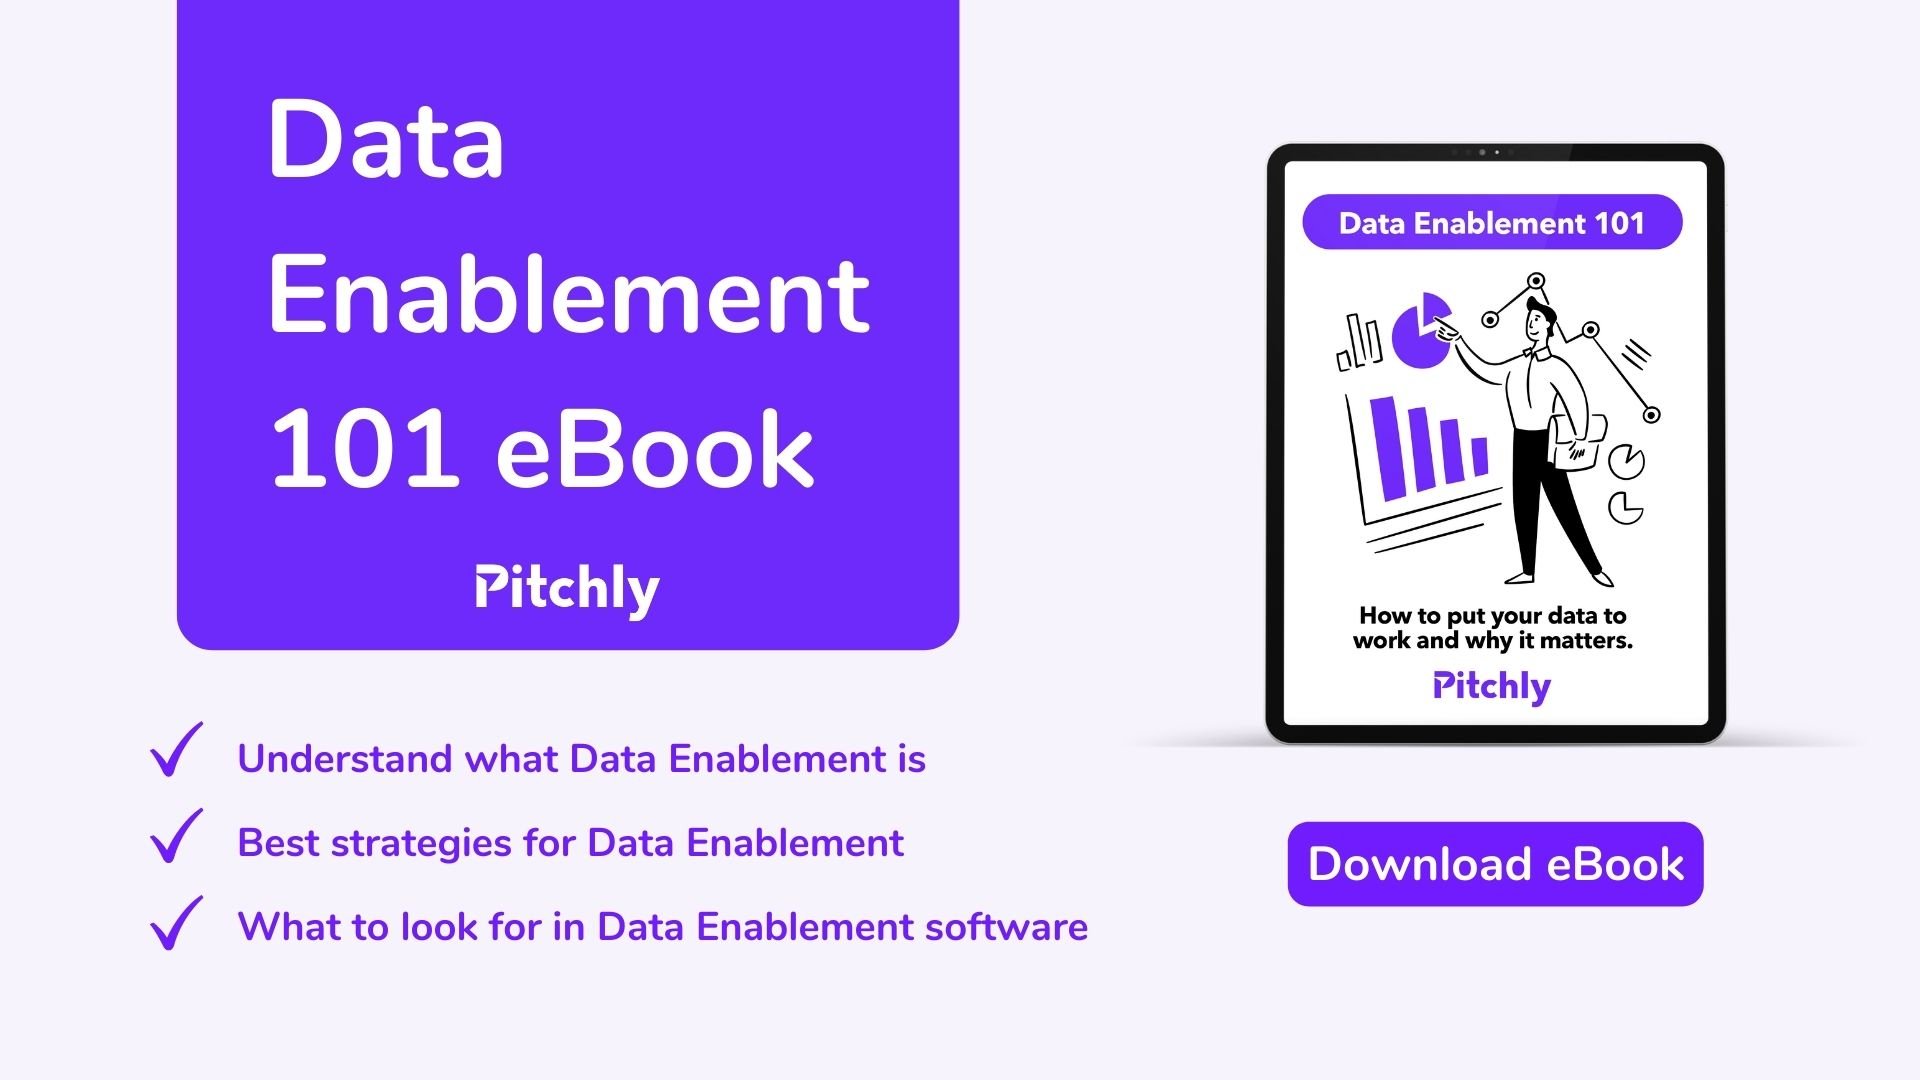 Data enablement 101 ebook summary